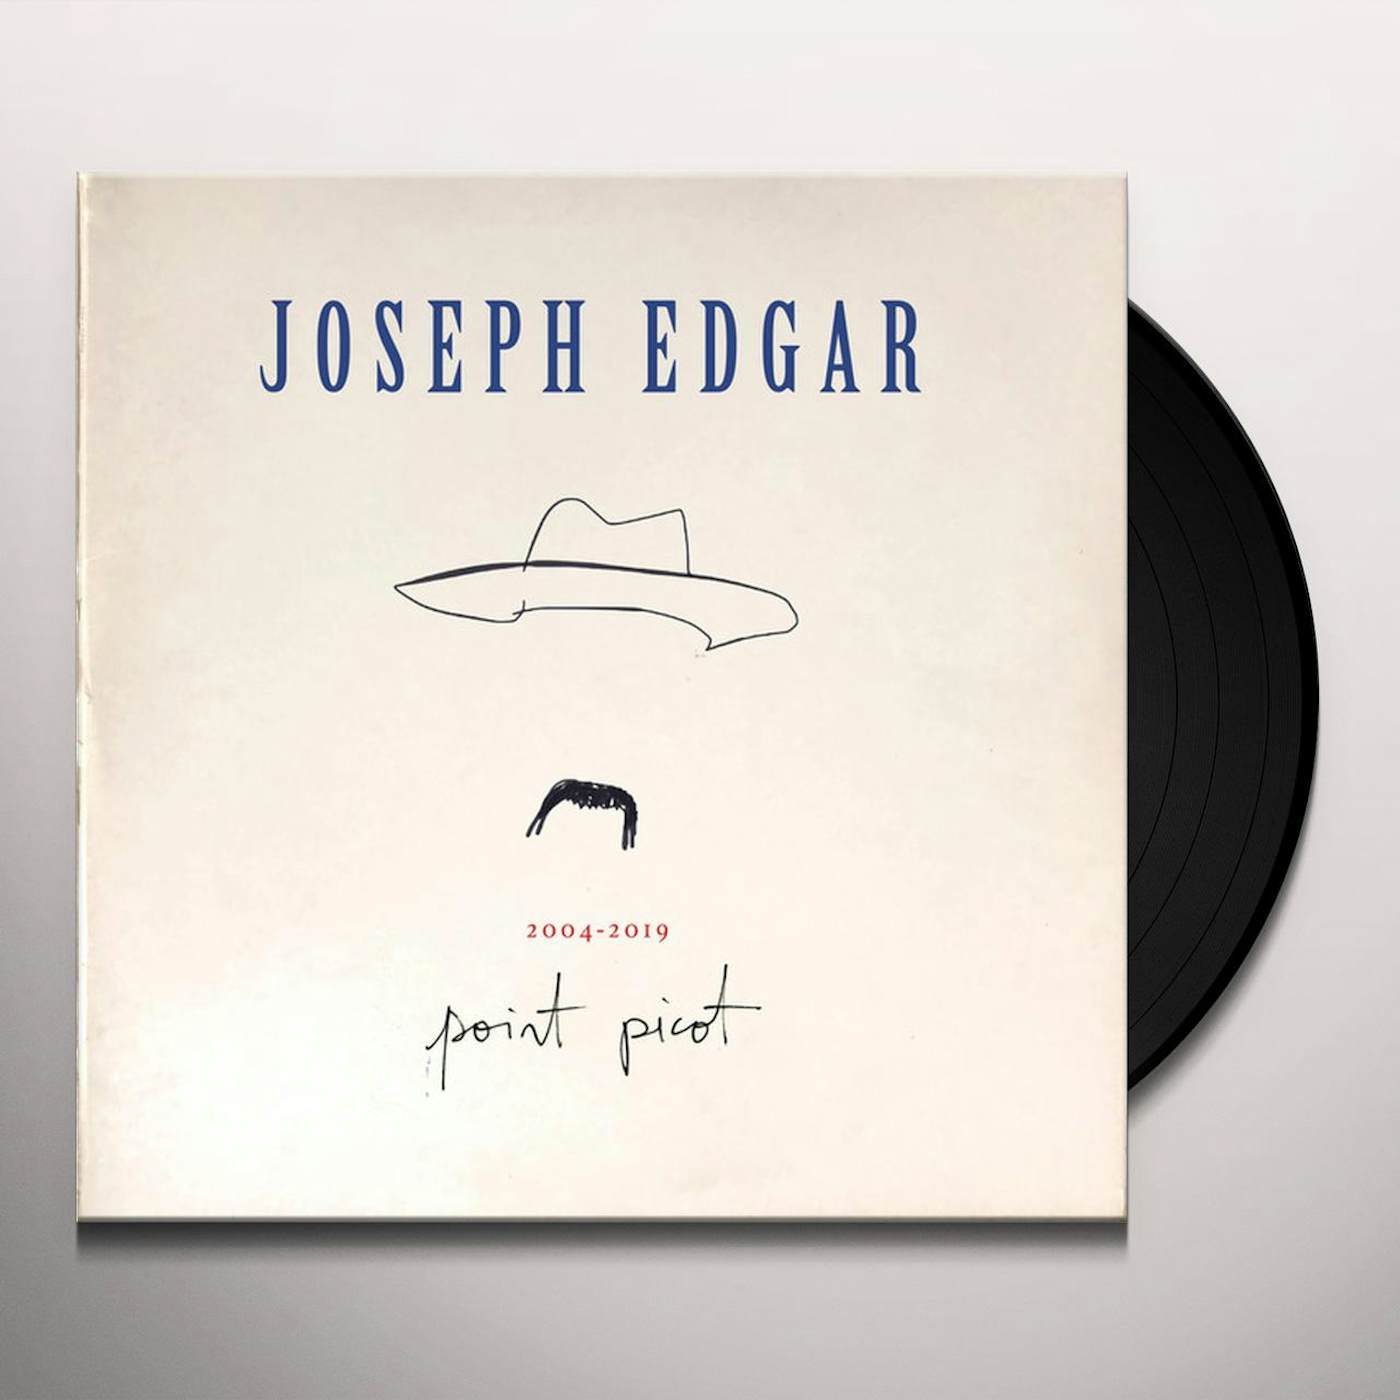 Joseph Edgar 2004-2019 Point Picot Vinyl Record